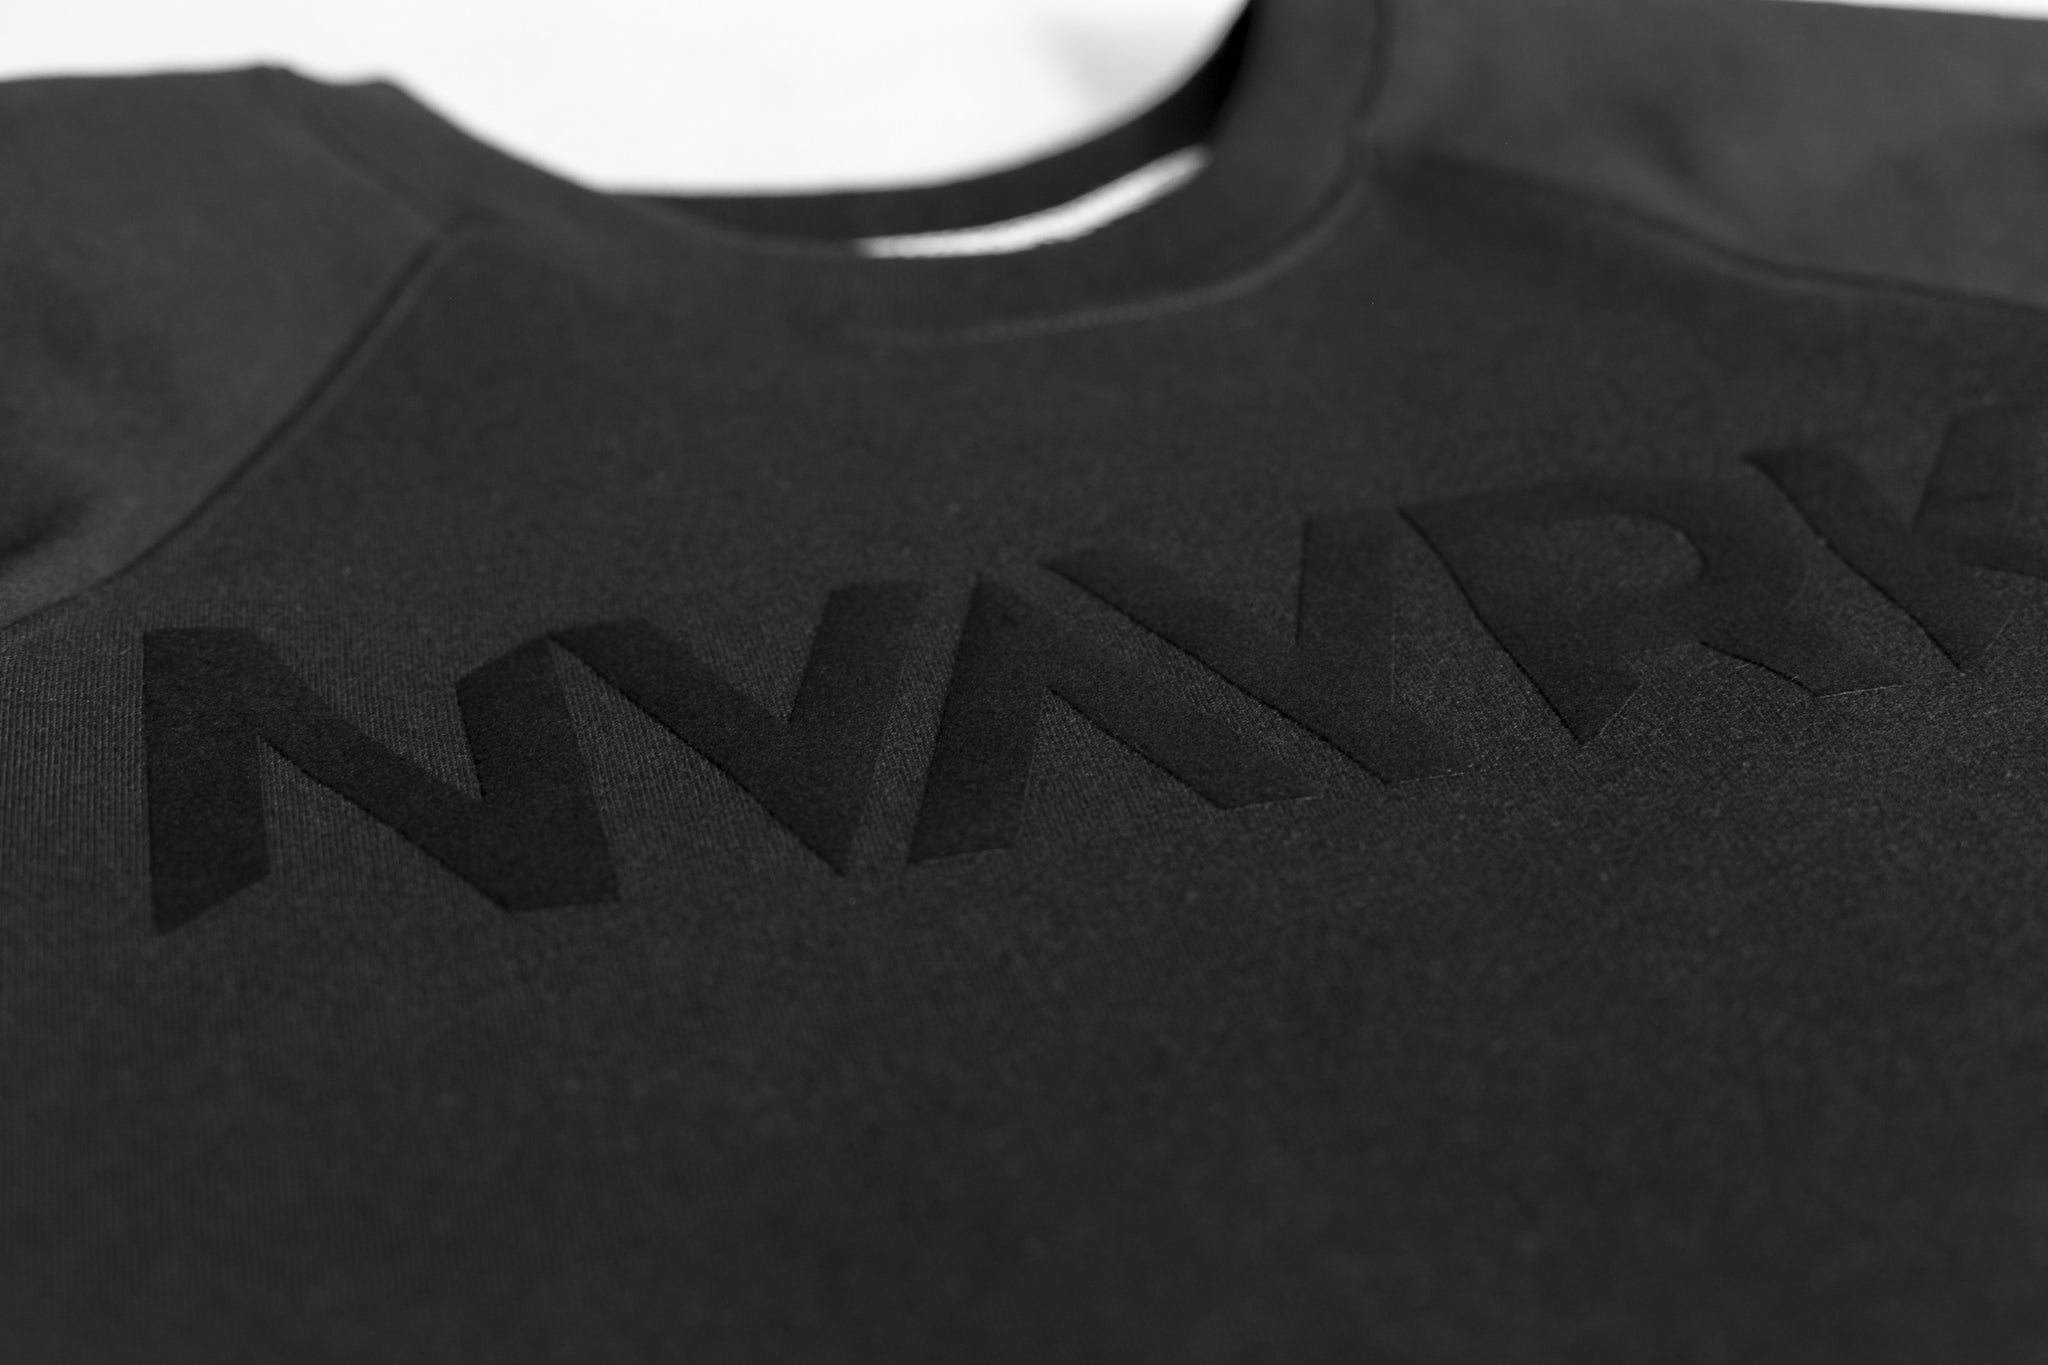 NVAYRK Signature Sweatshirt (Women)